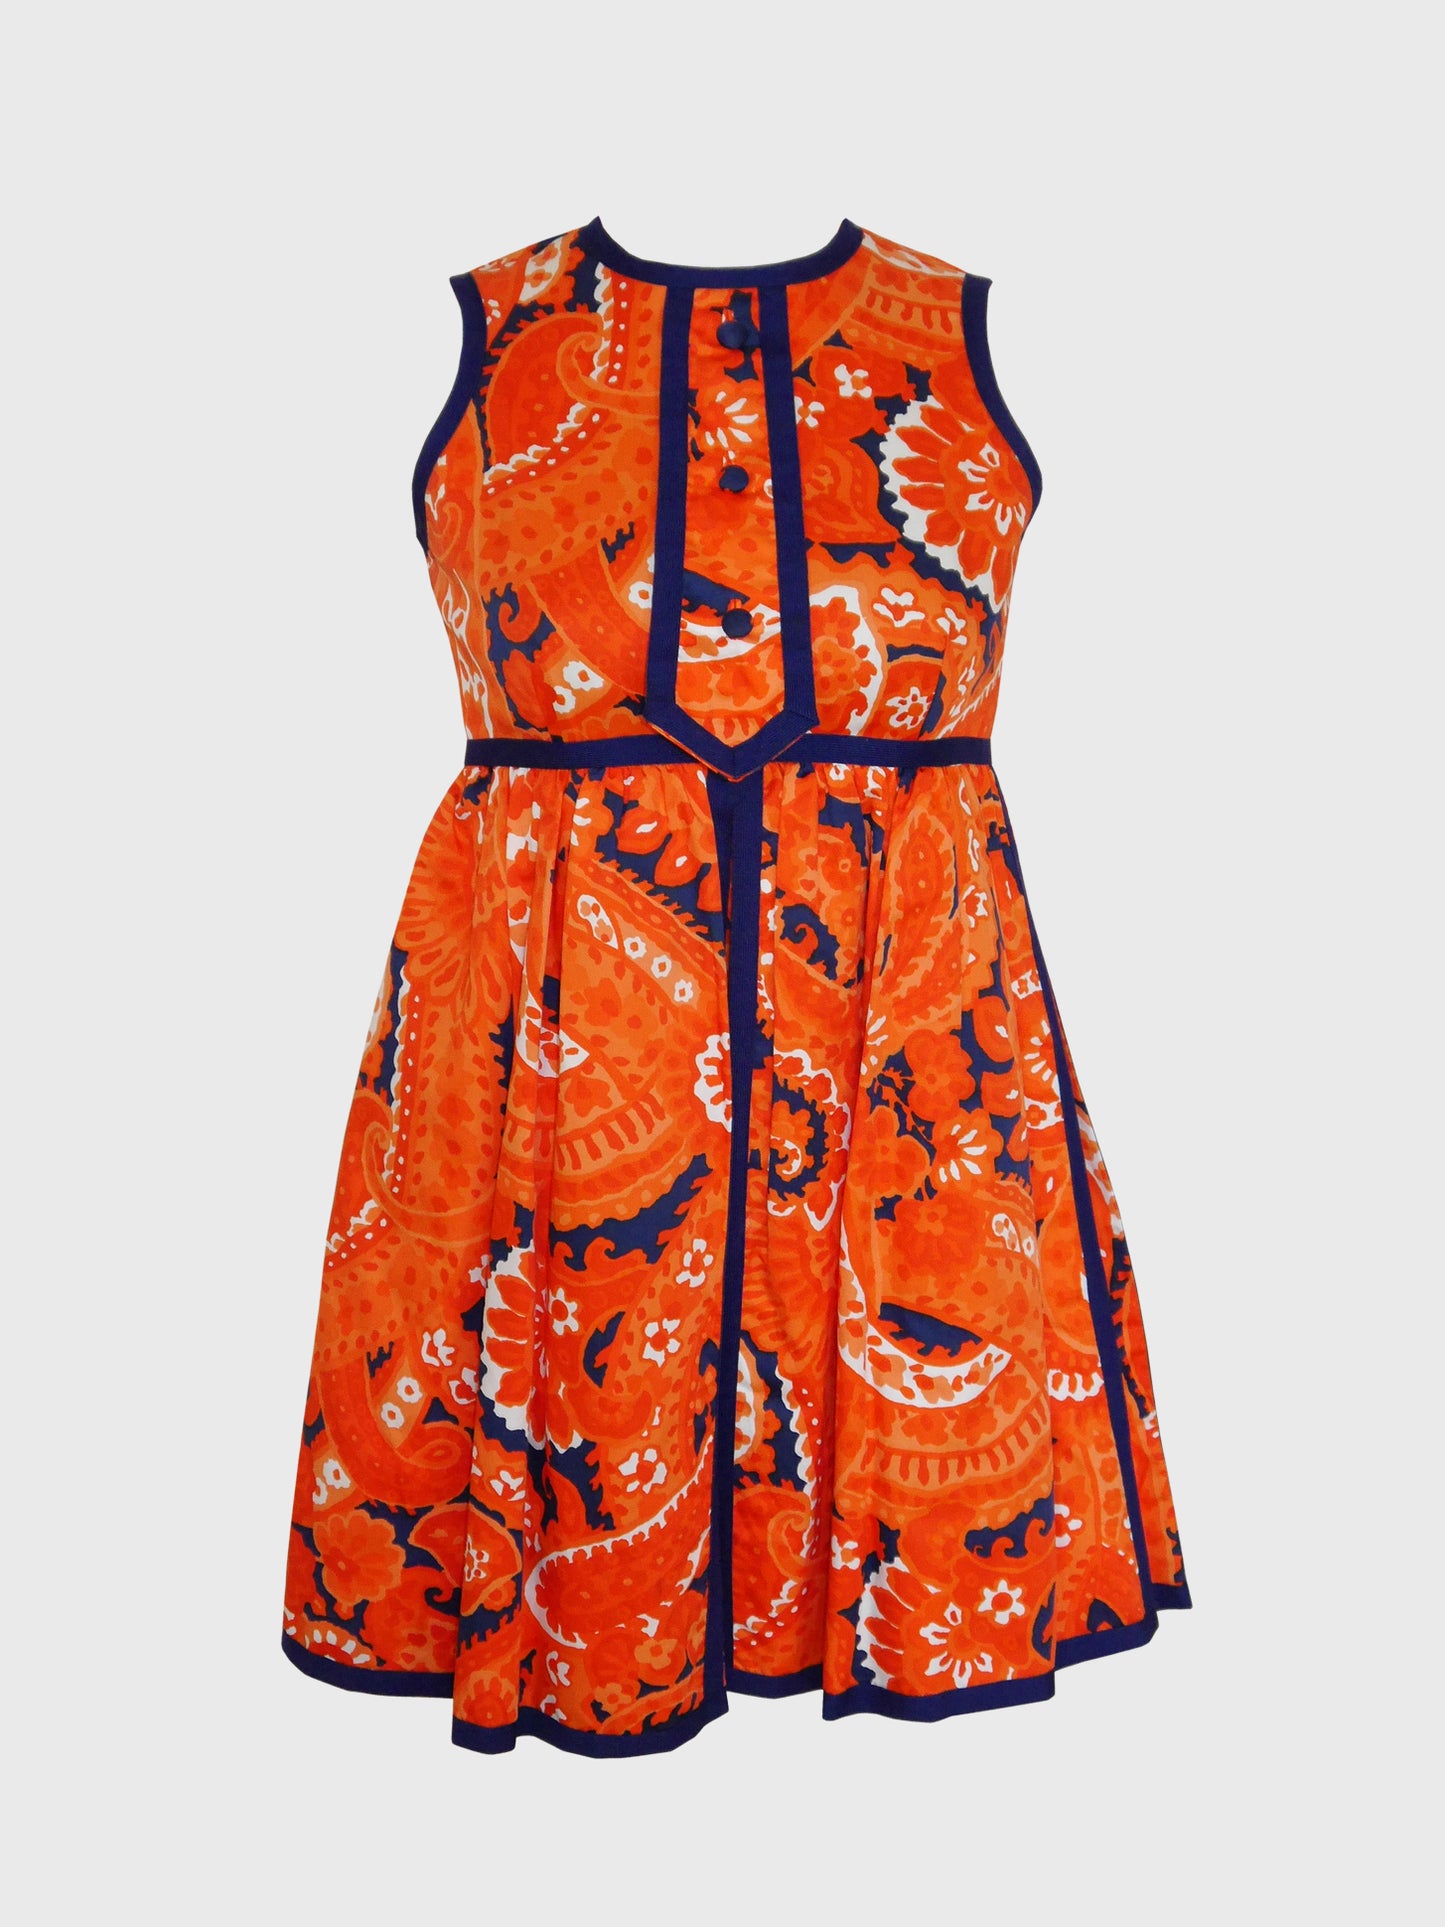 GEOFFREY BEENE Spring 1969 Vintage Mini Dress Babydoll Size XXS